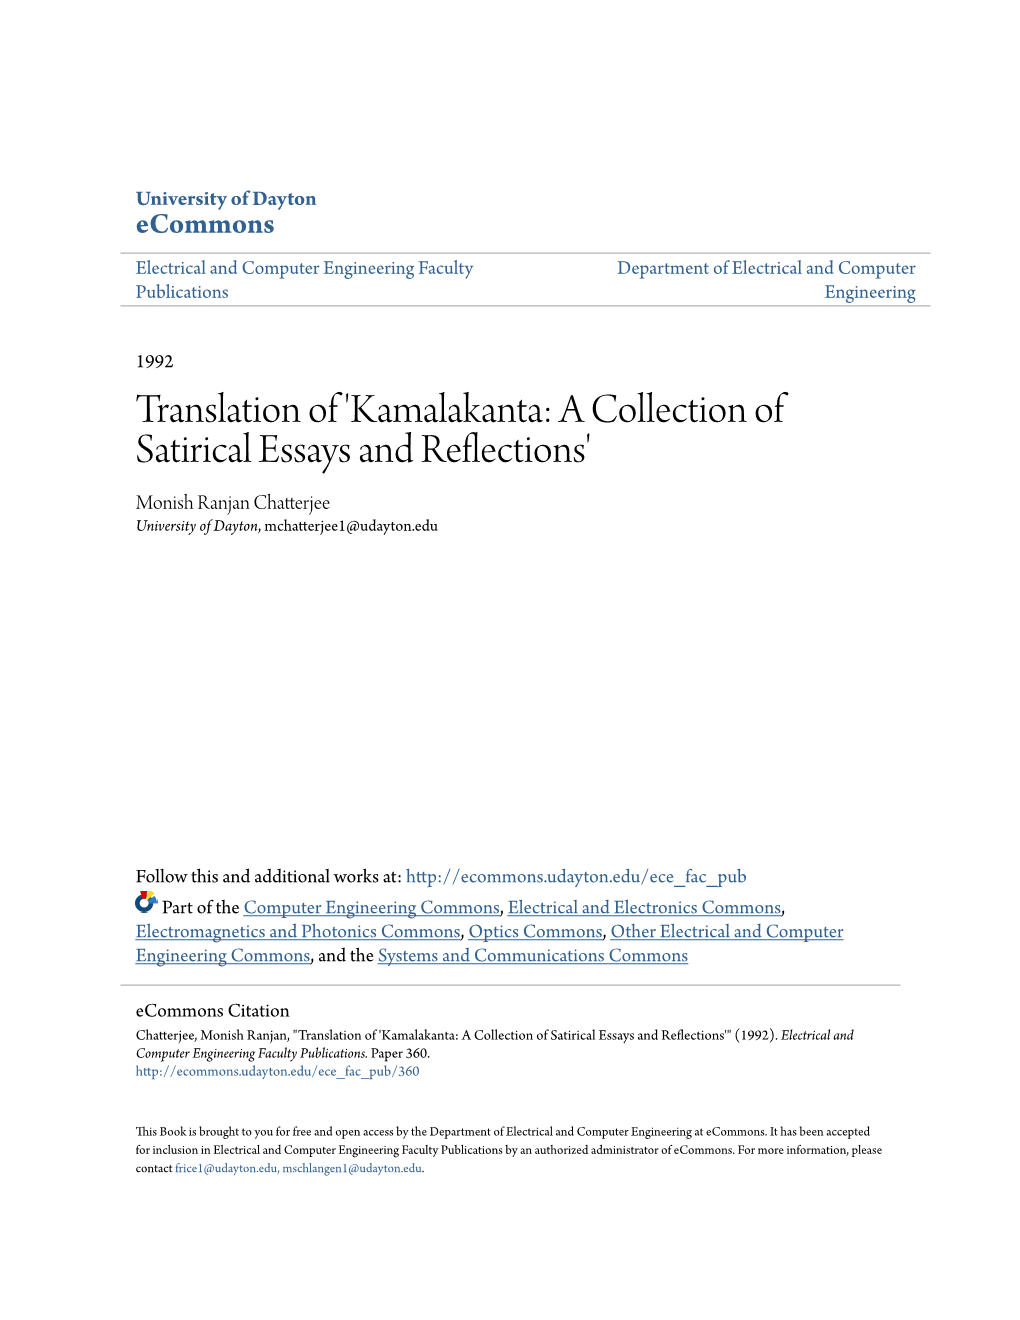 Kamalakanta: a Collection of Satirical Essays and Reflections' Monish Ranjan Chatterjee University of Dayton, Mchatterjee1@Udayton.Edu